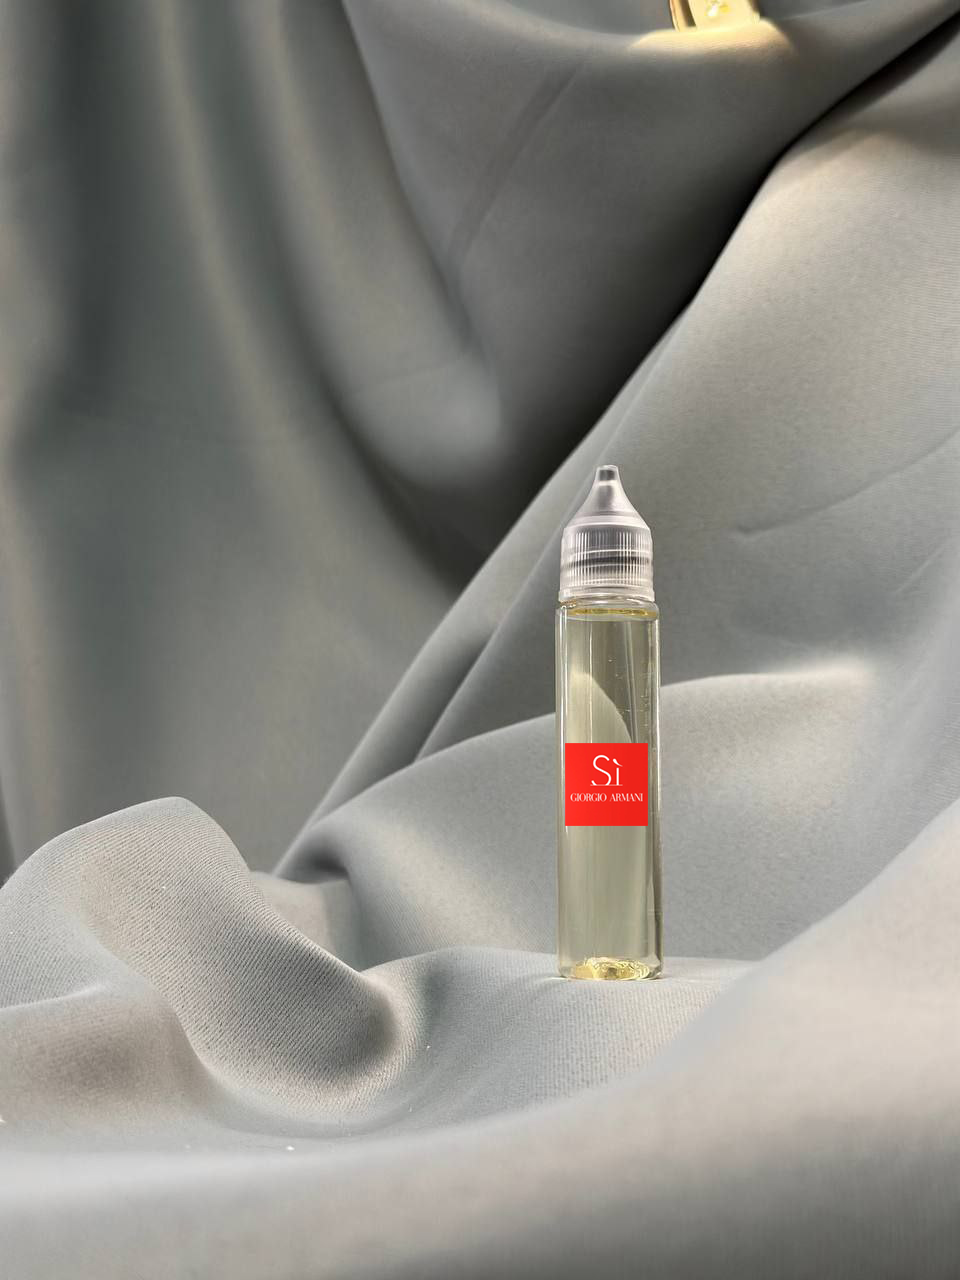 Заправка "Armani Si" для автопарфюма 30ml - авто-парфюм по мотивам легендарного аромата